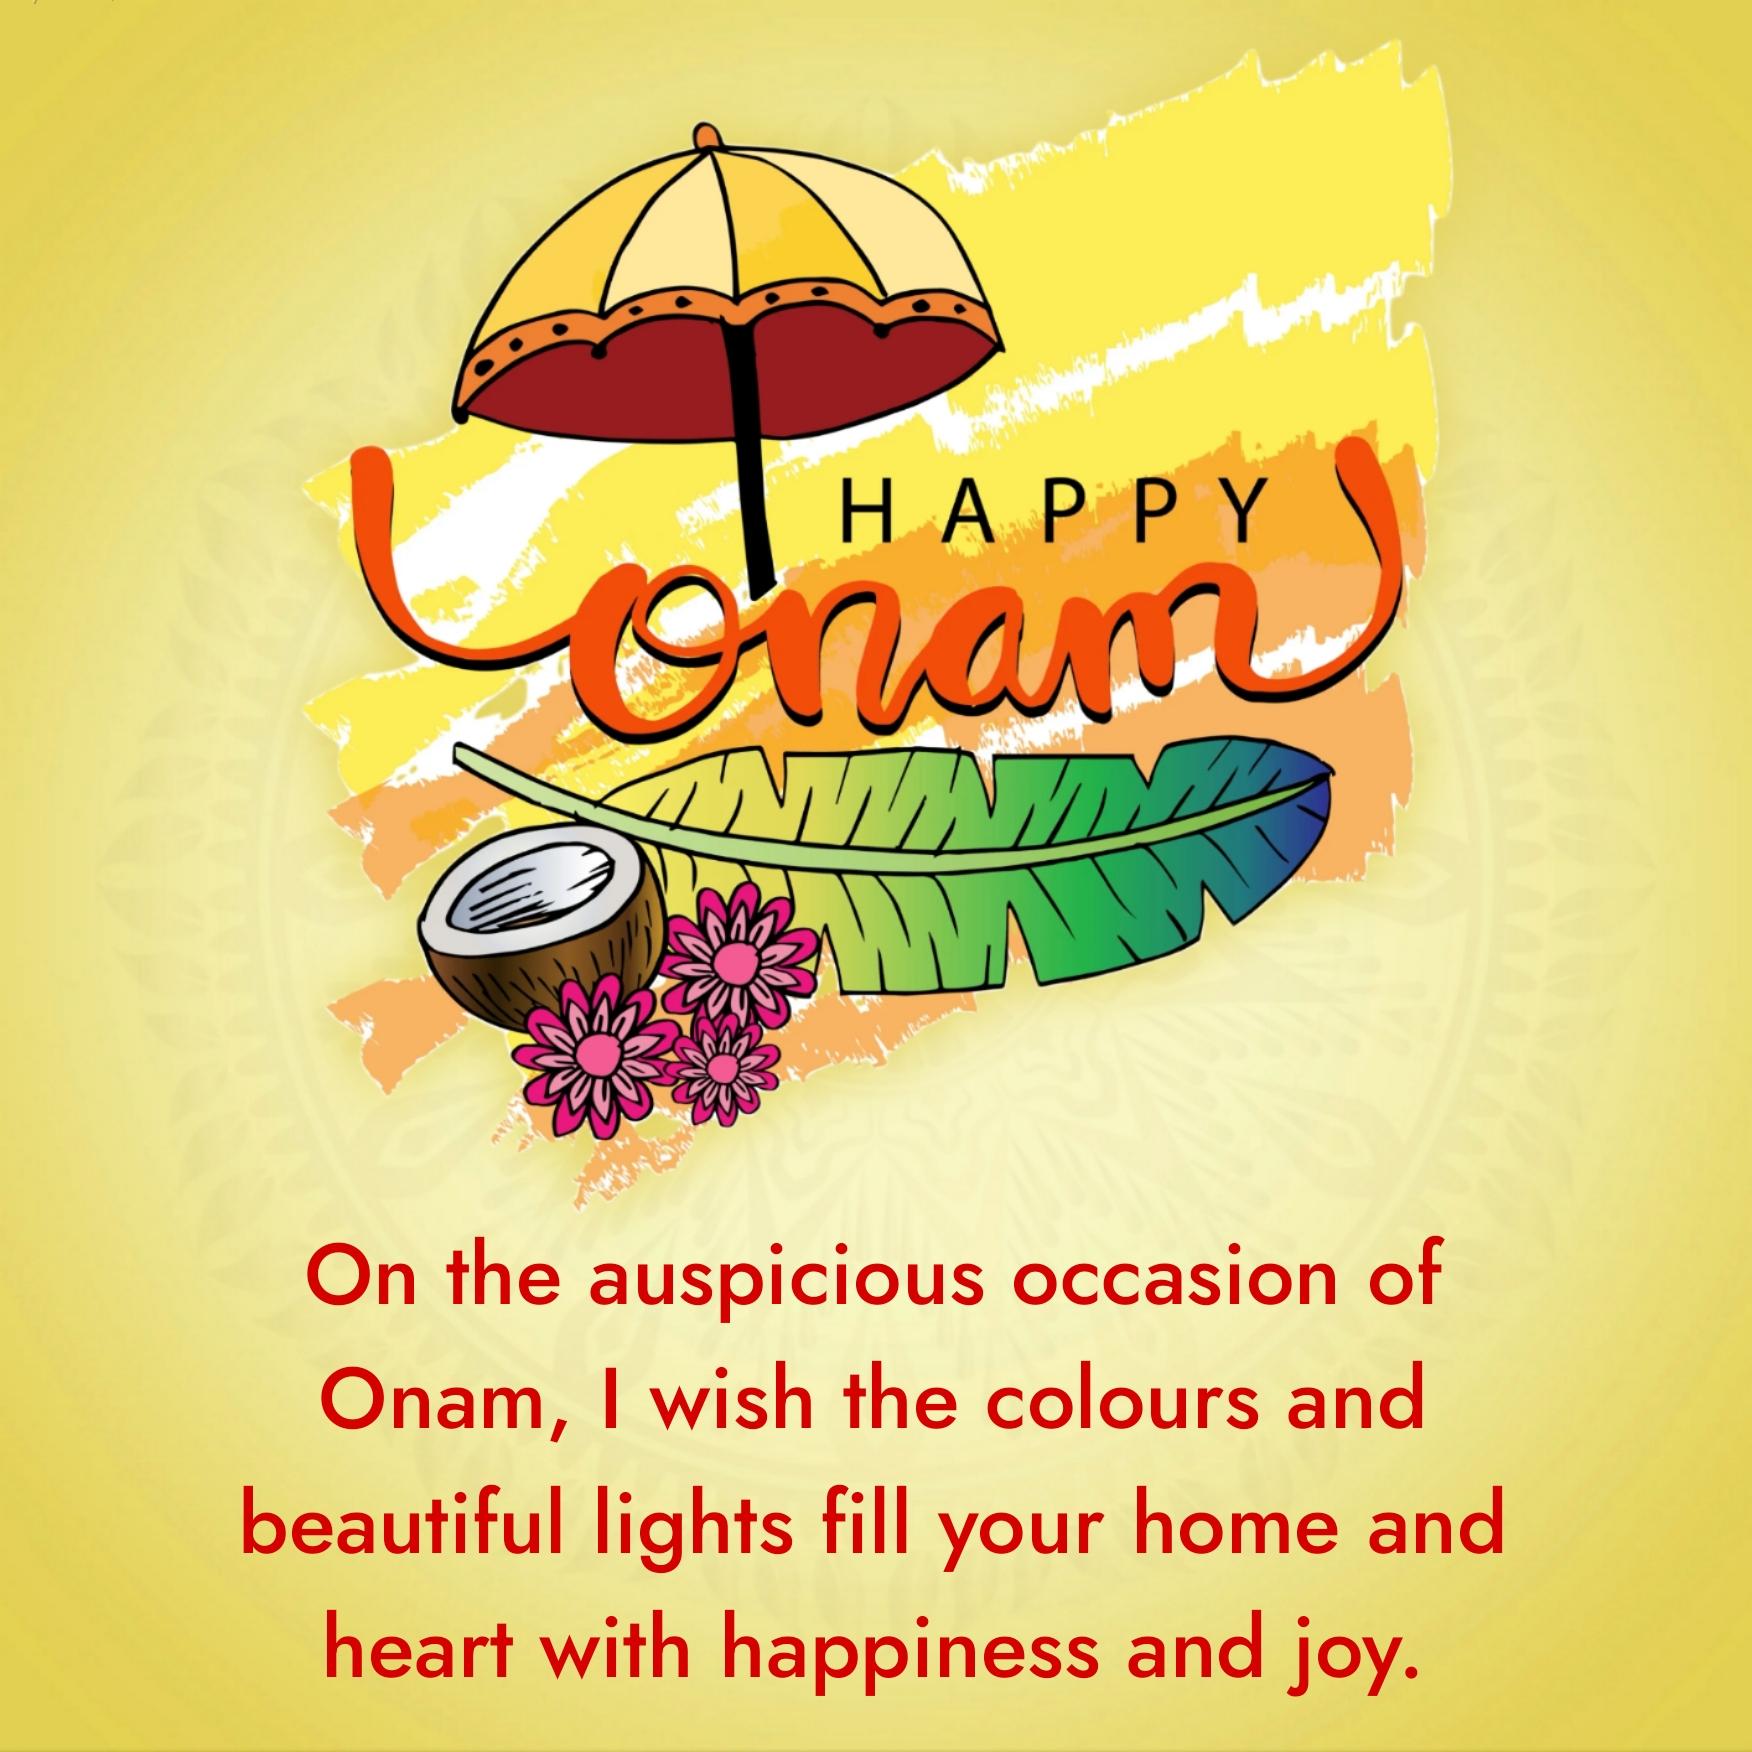 On this joyous occasion of Onam I wish you joy and good health